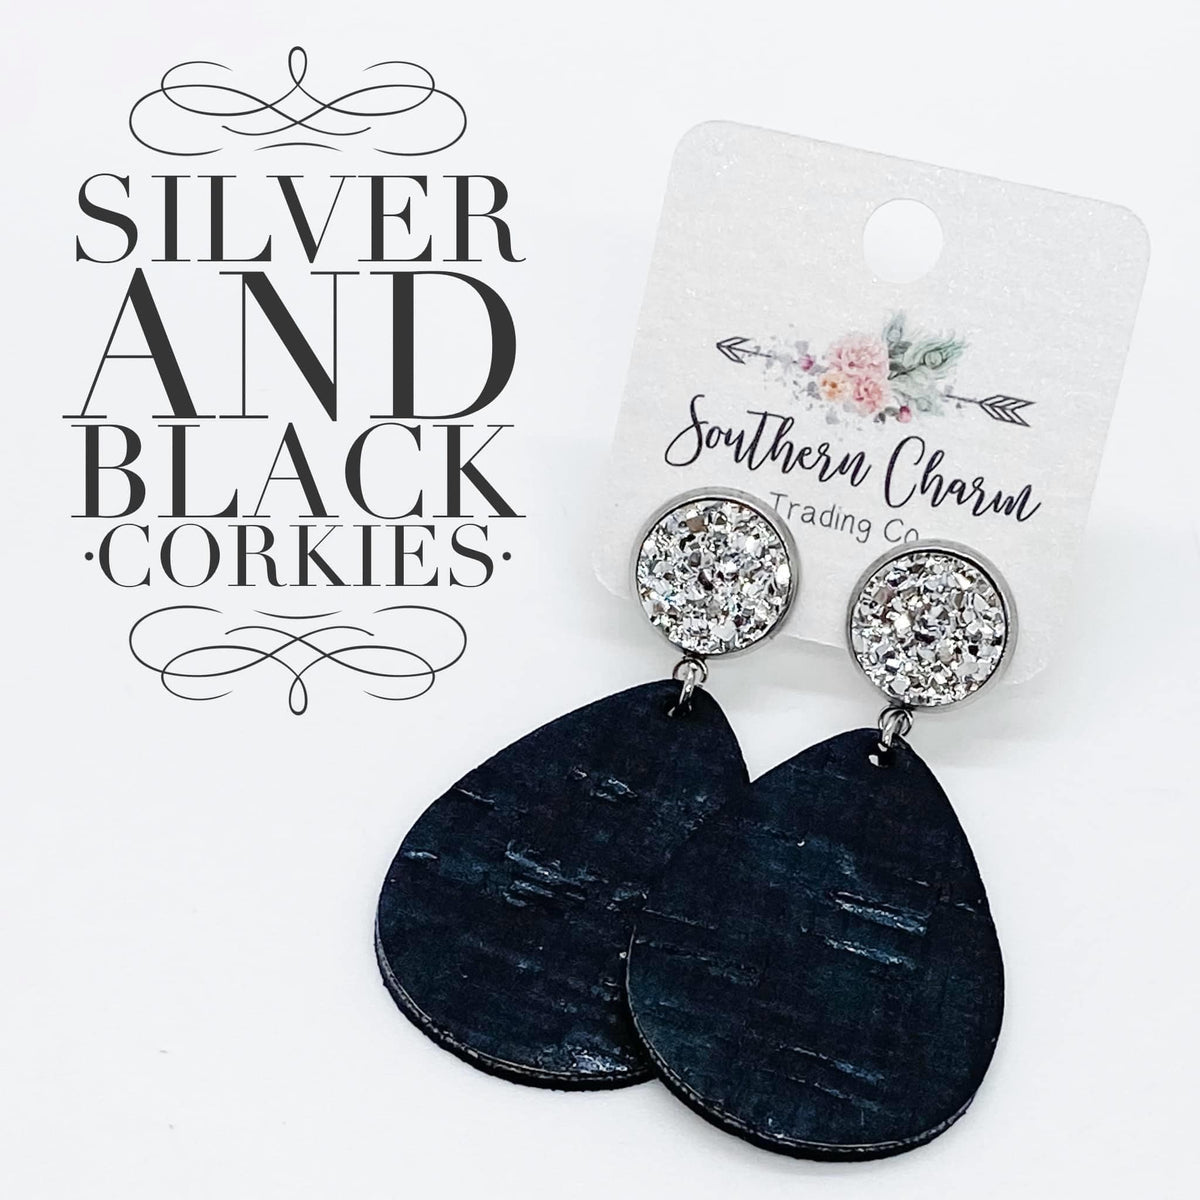 2" Silver & Black Dangle Corkies